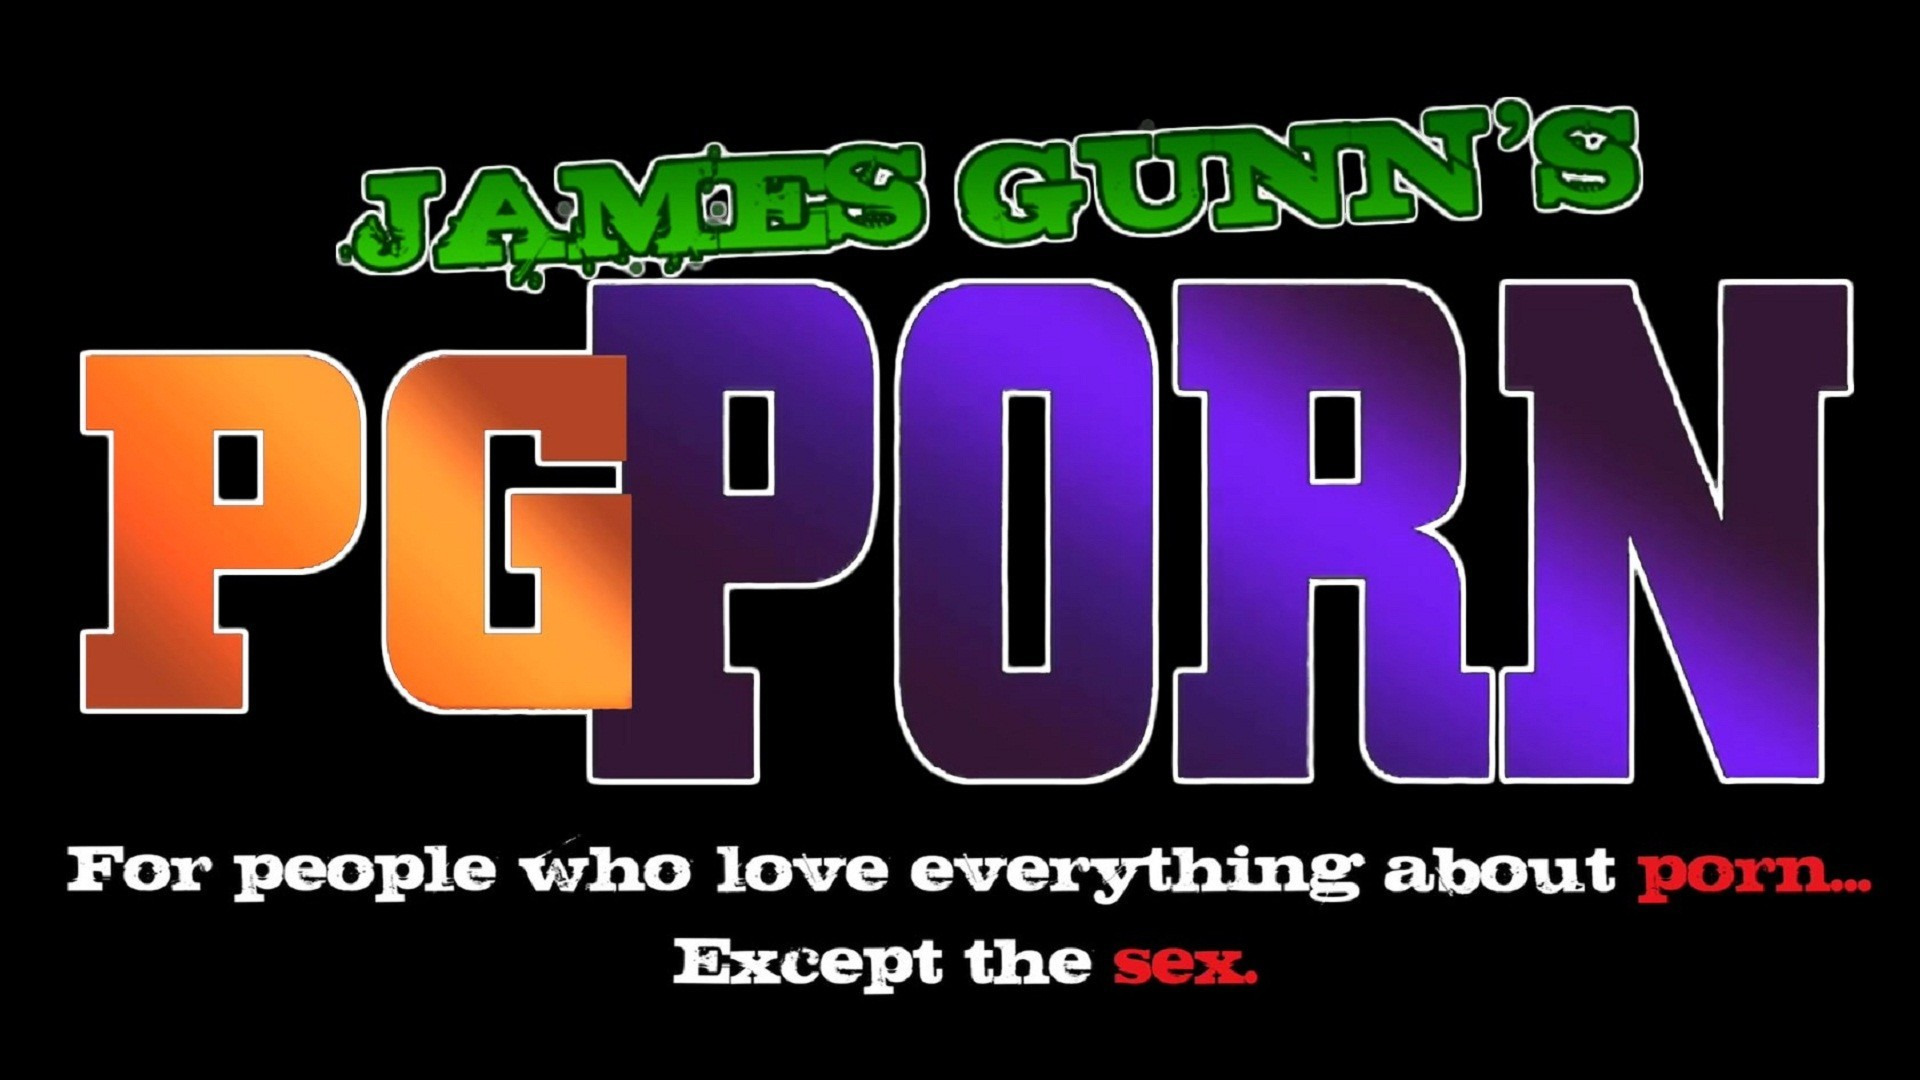 Show PG Porn